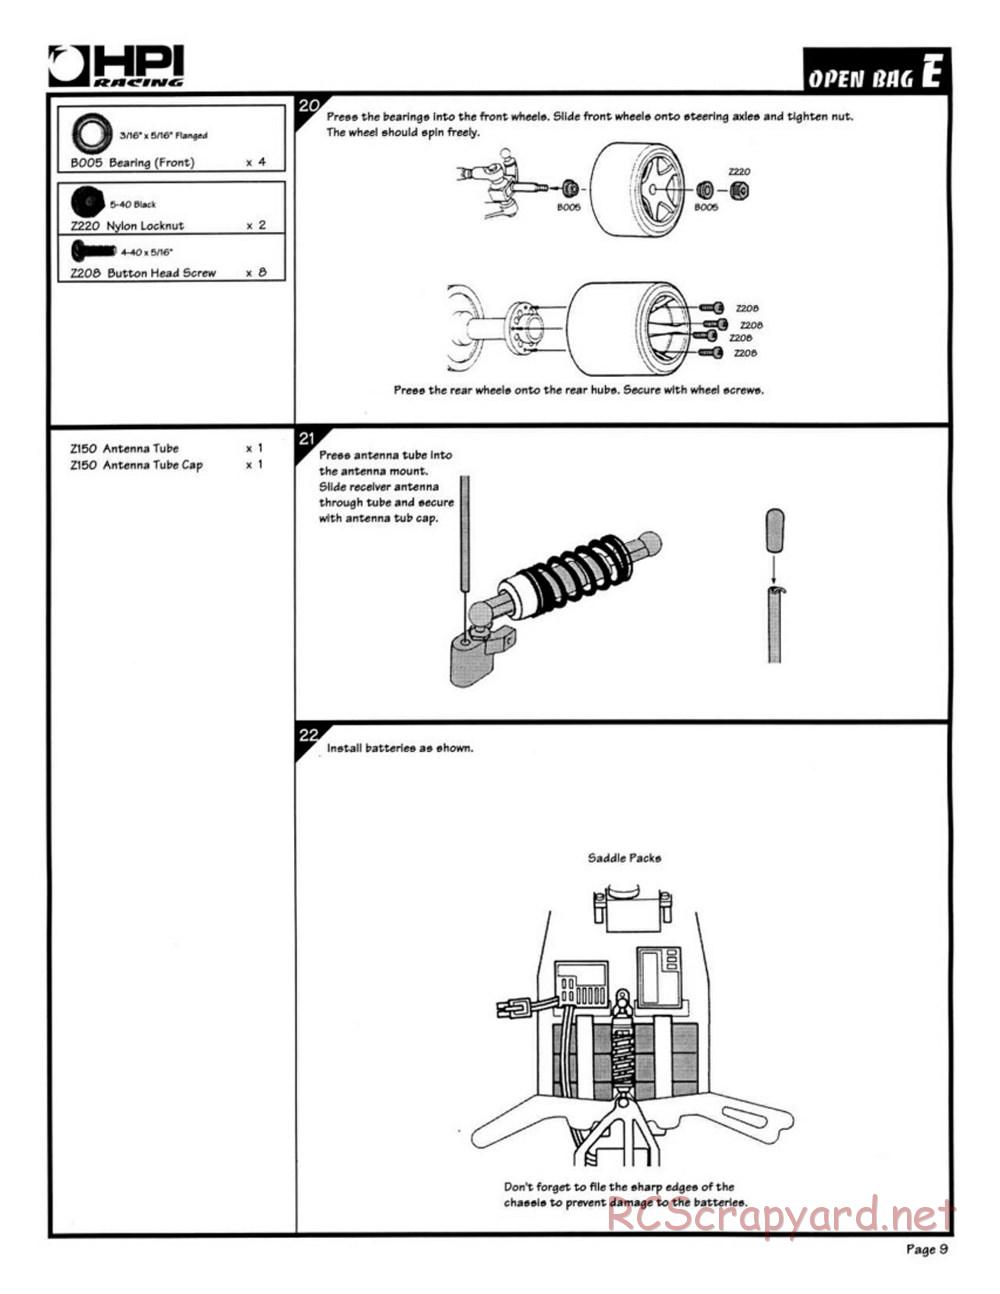 HPI - Road Star 10GW - Manual - Page 9